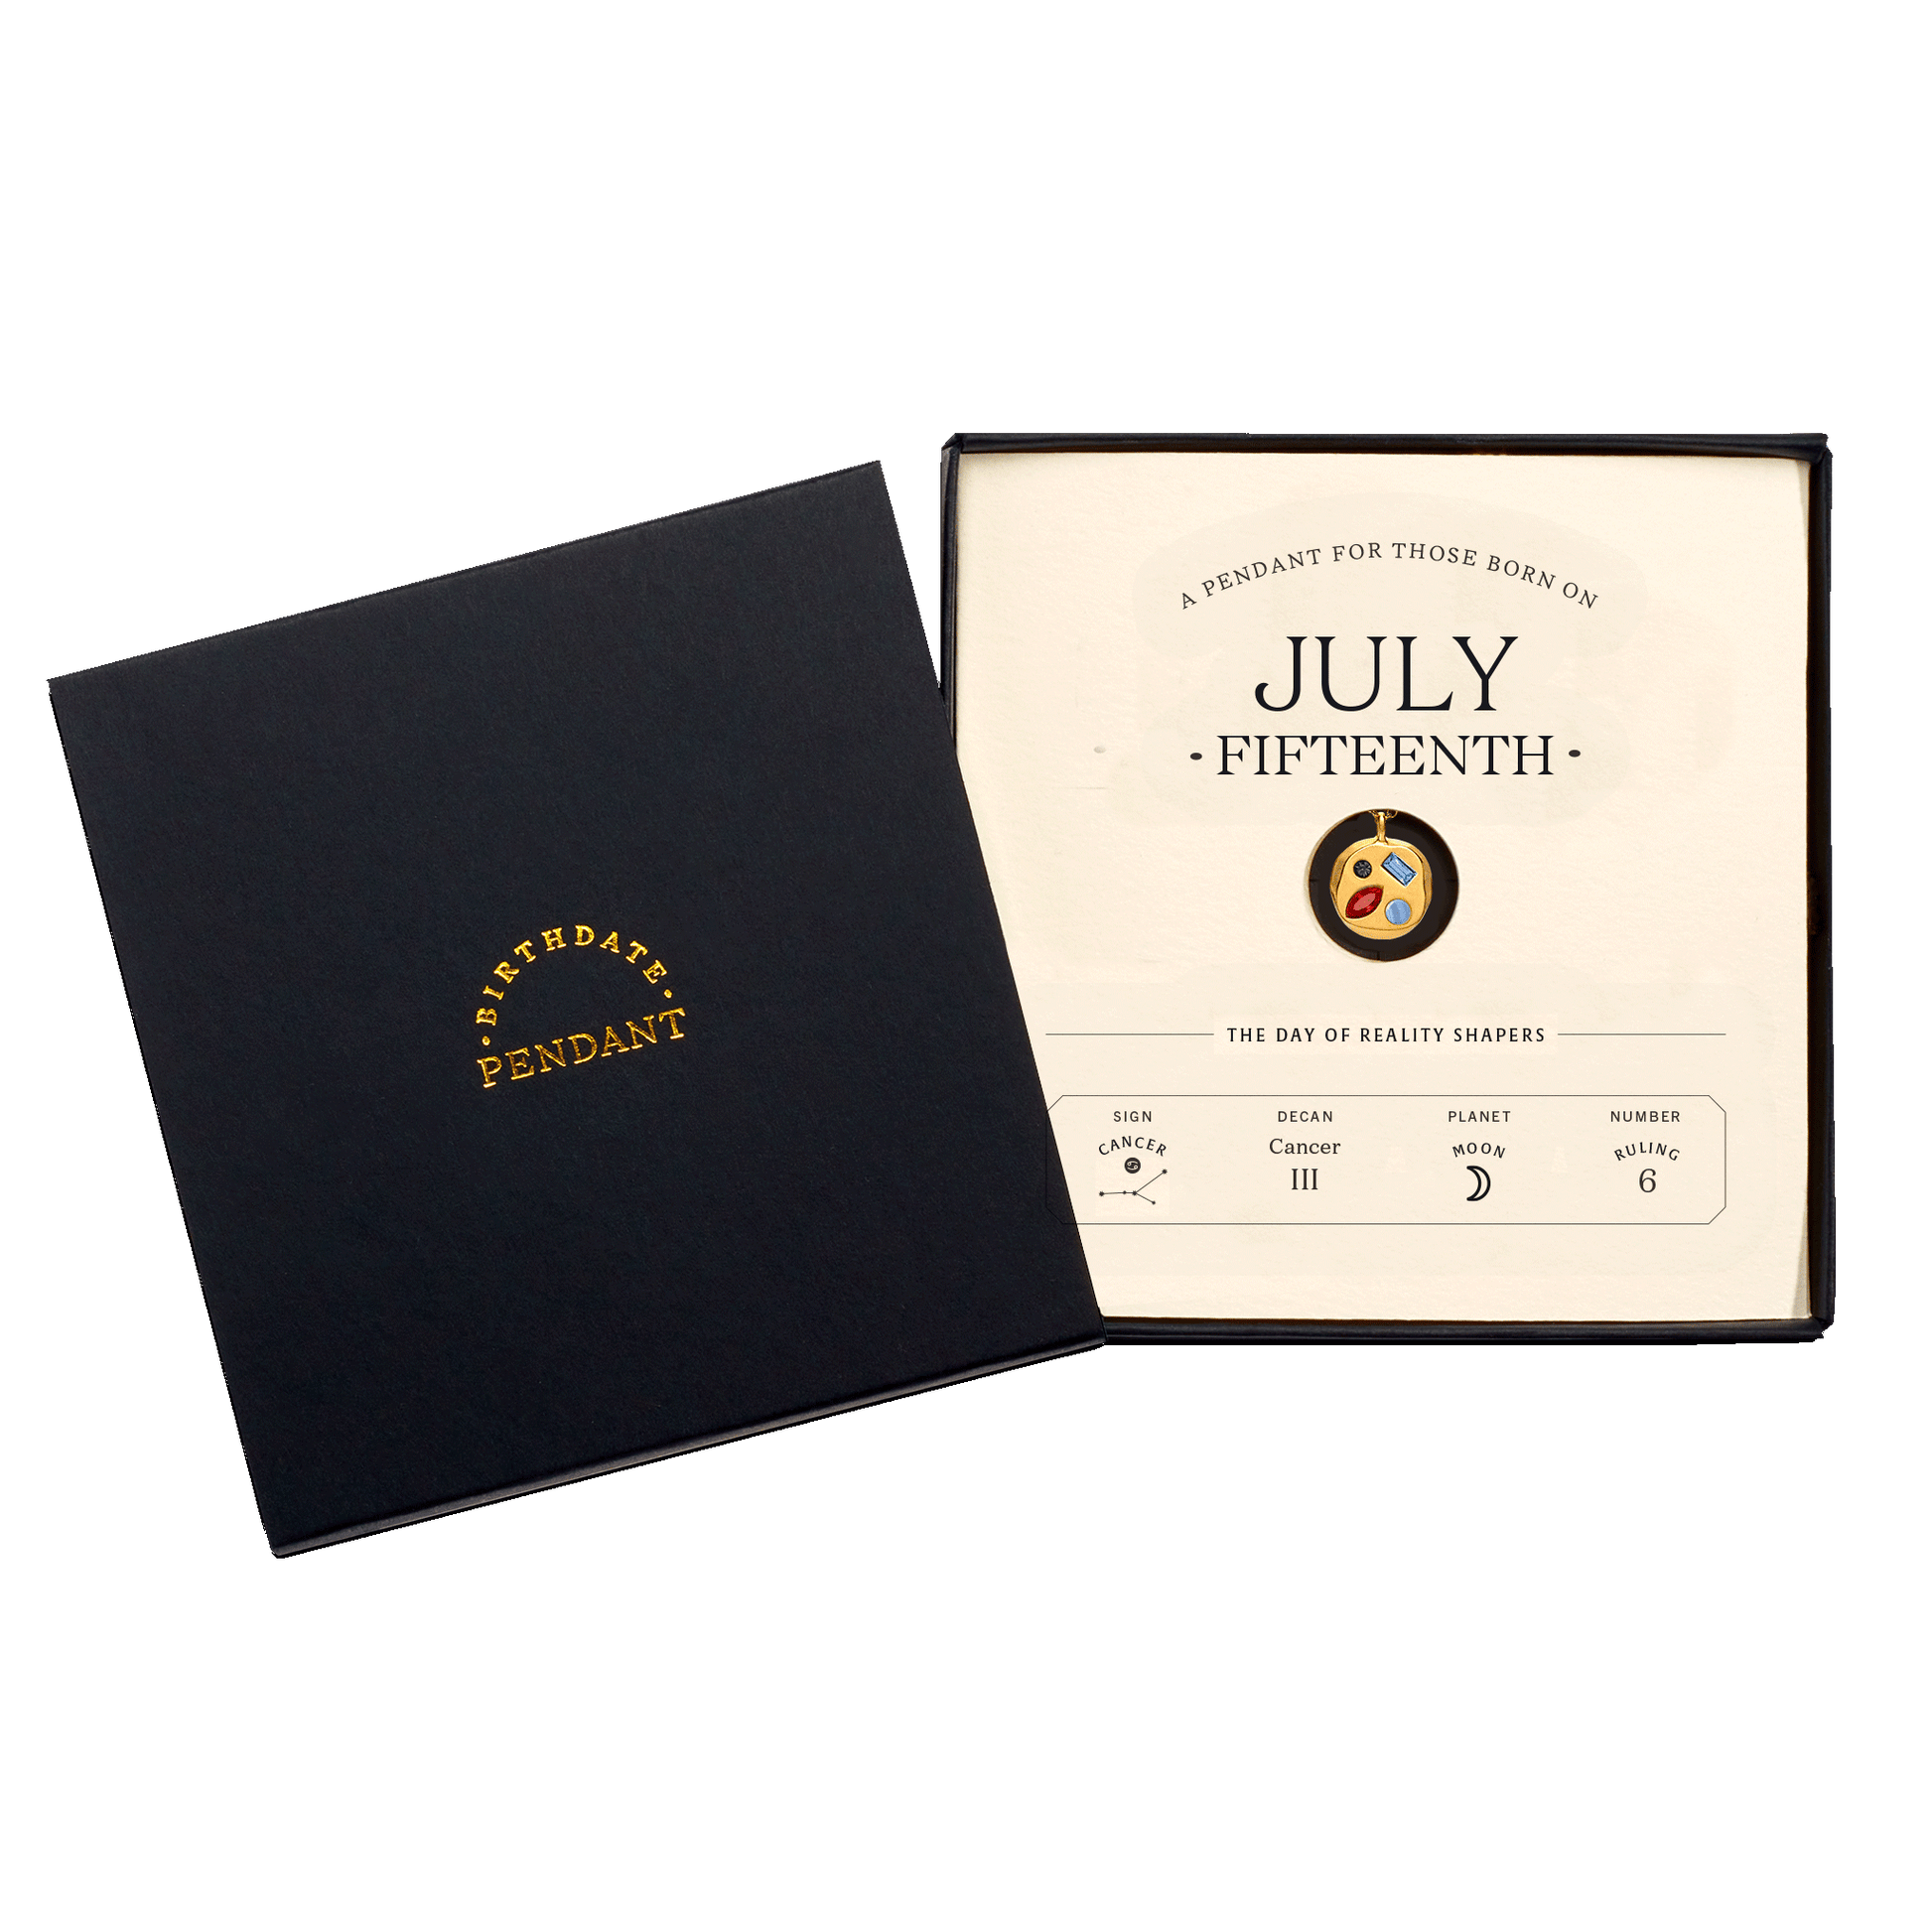 The July Fifteenth Pendant inside its box